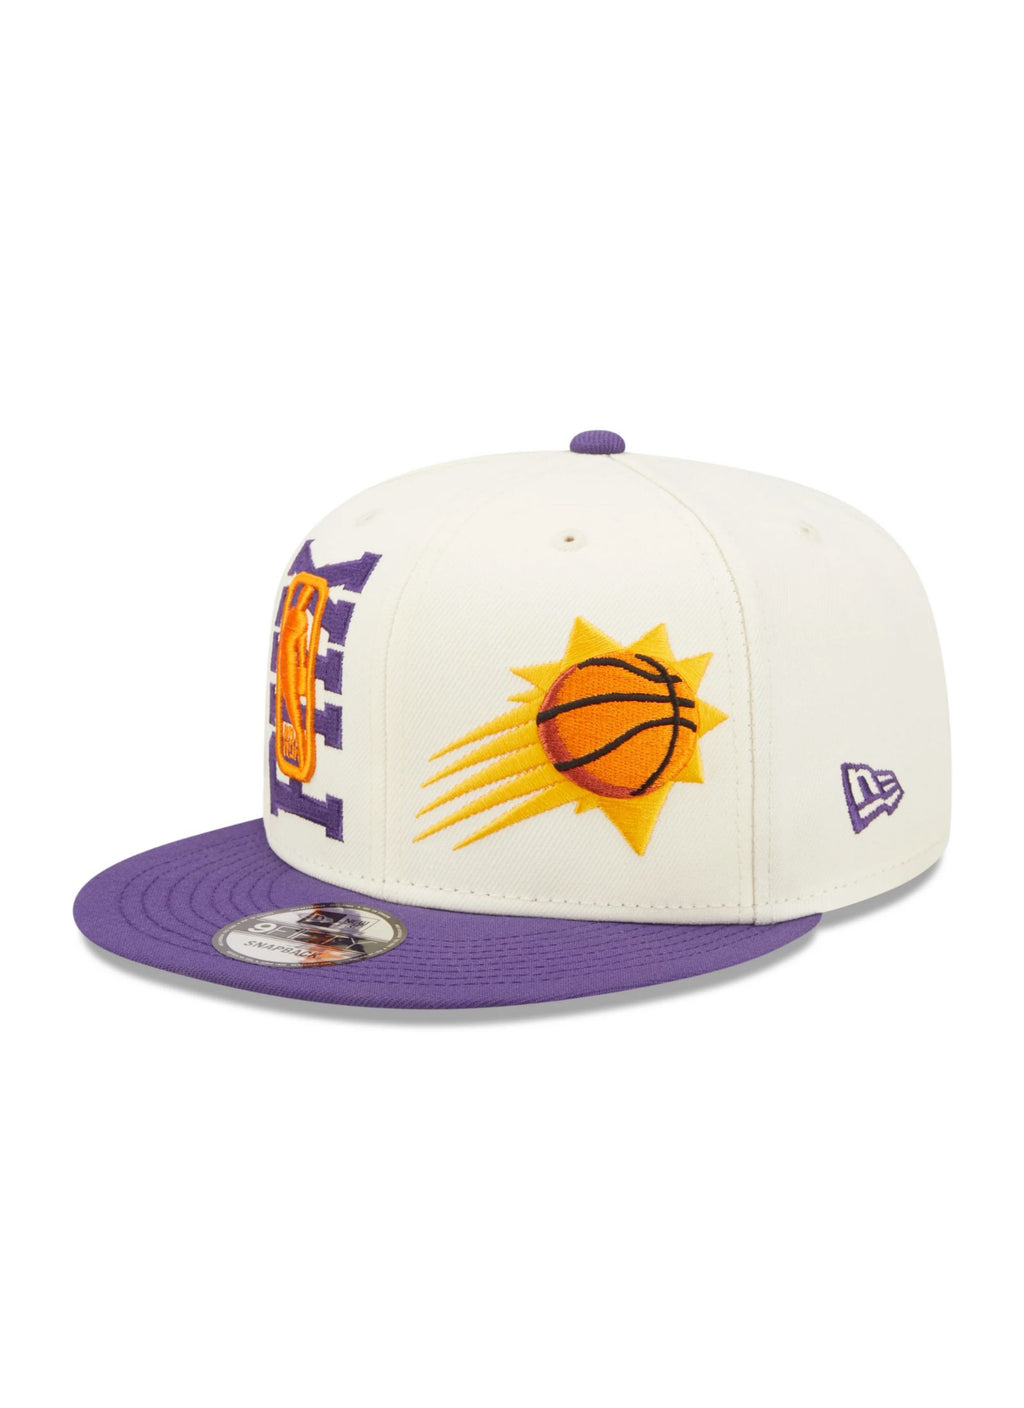 New Era NBA22 Draft 9FIFTY Phoenix Suns Beige